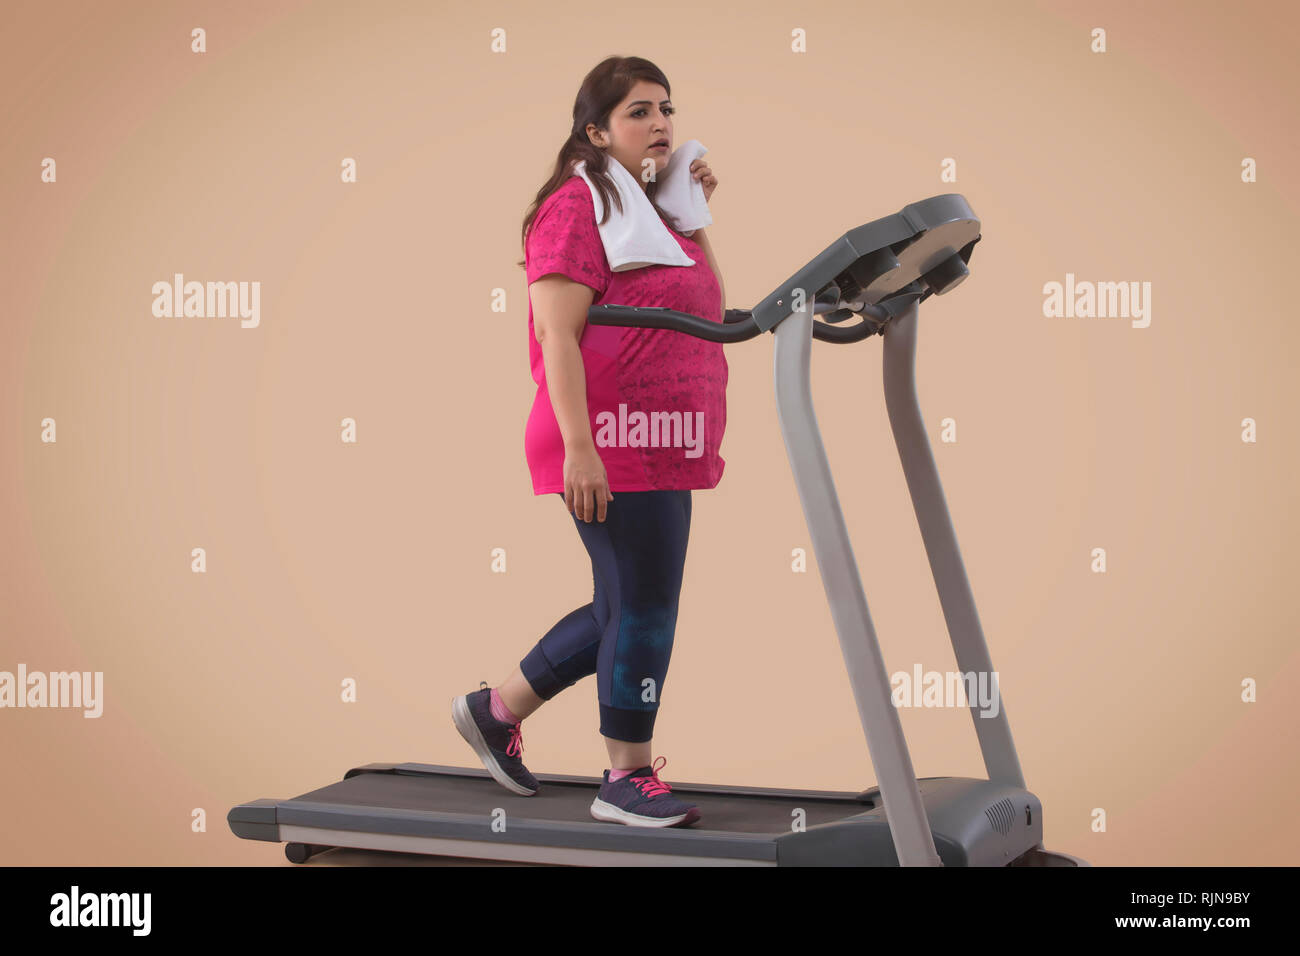 Fette Frau tun Übung auf Laufband im Fitnessstudio Stockfotografie - Alamy